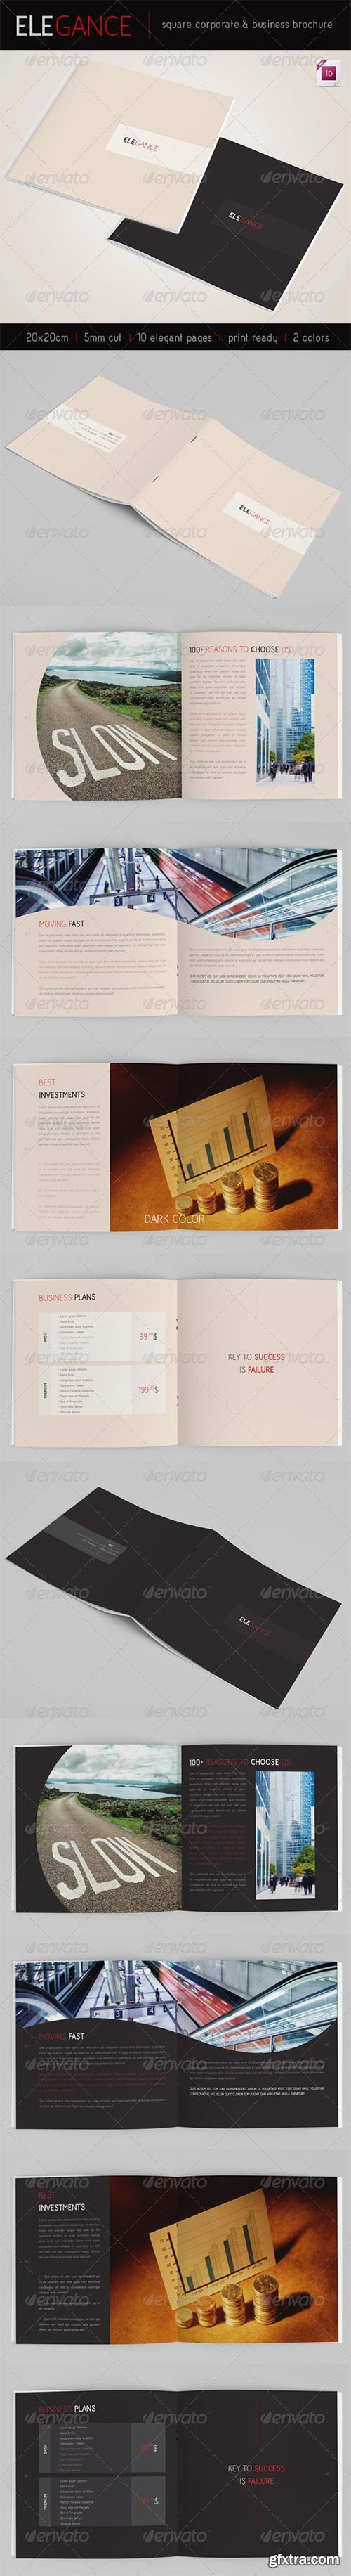 GraphicRiver - Elegance | Square 10 pages Brochure | 2 Colors